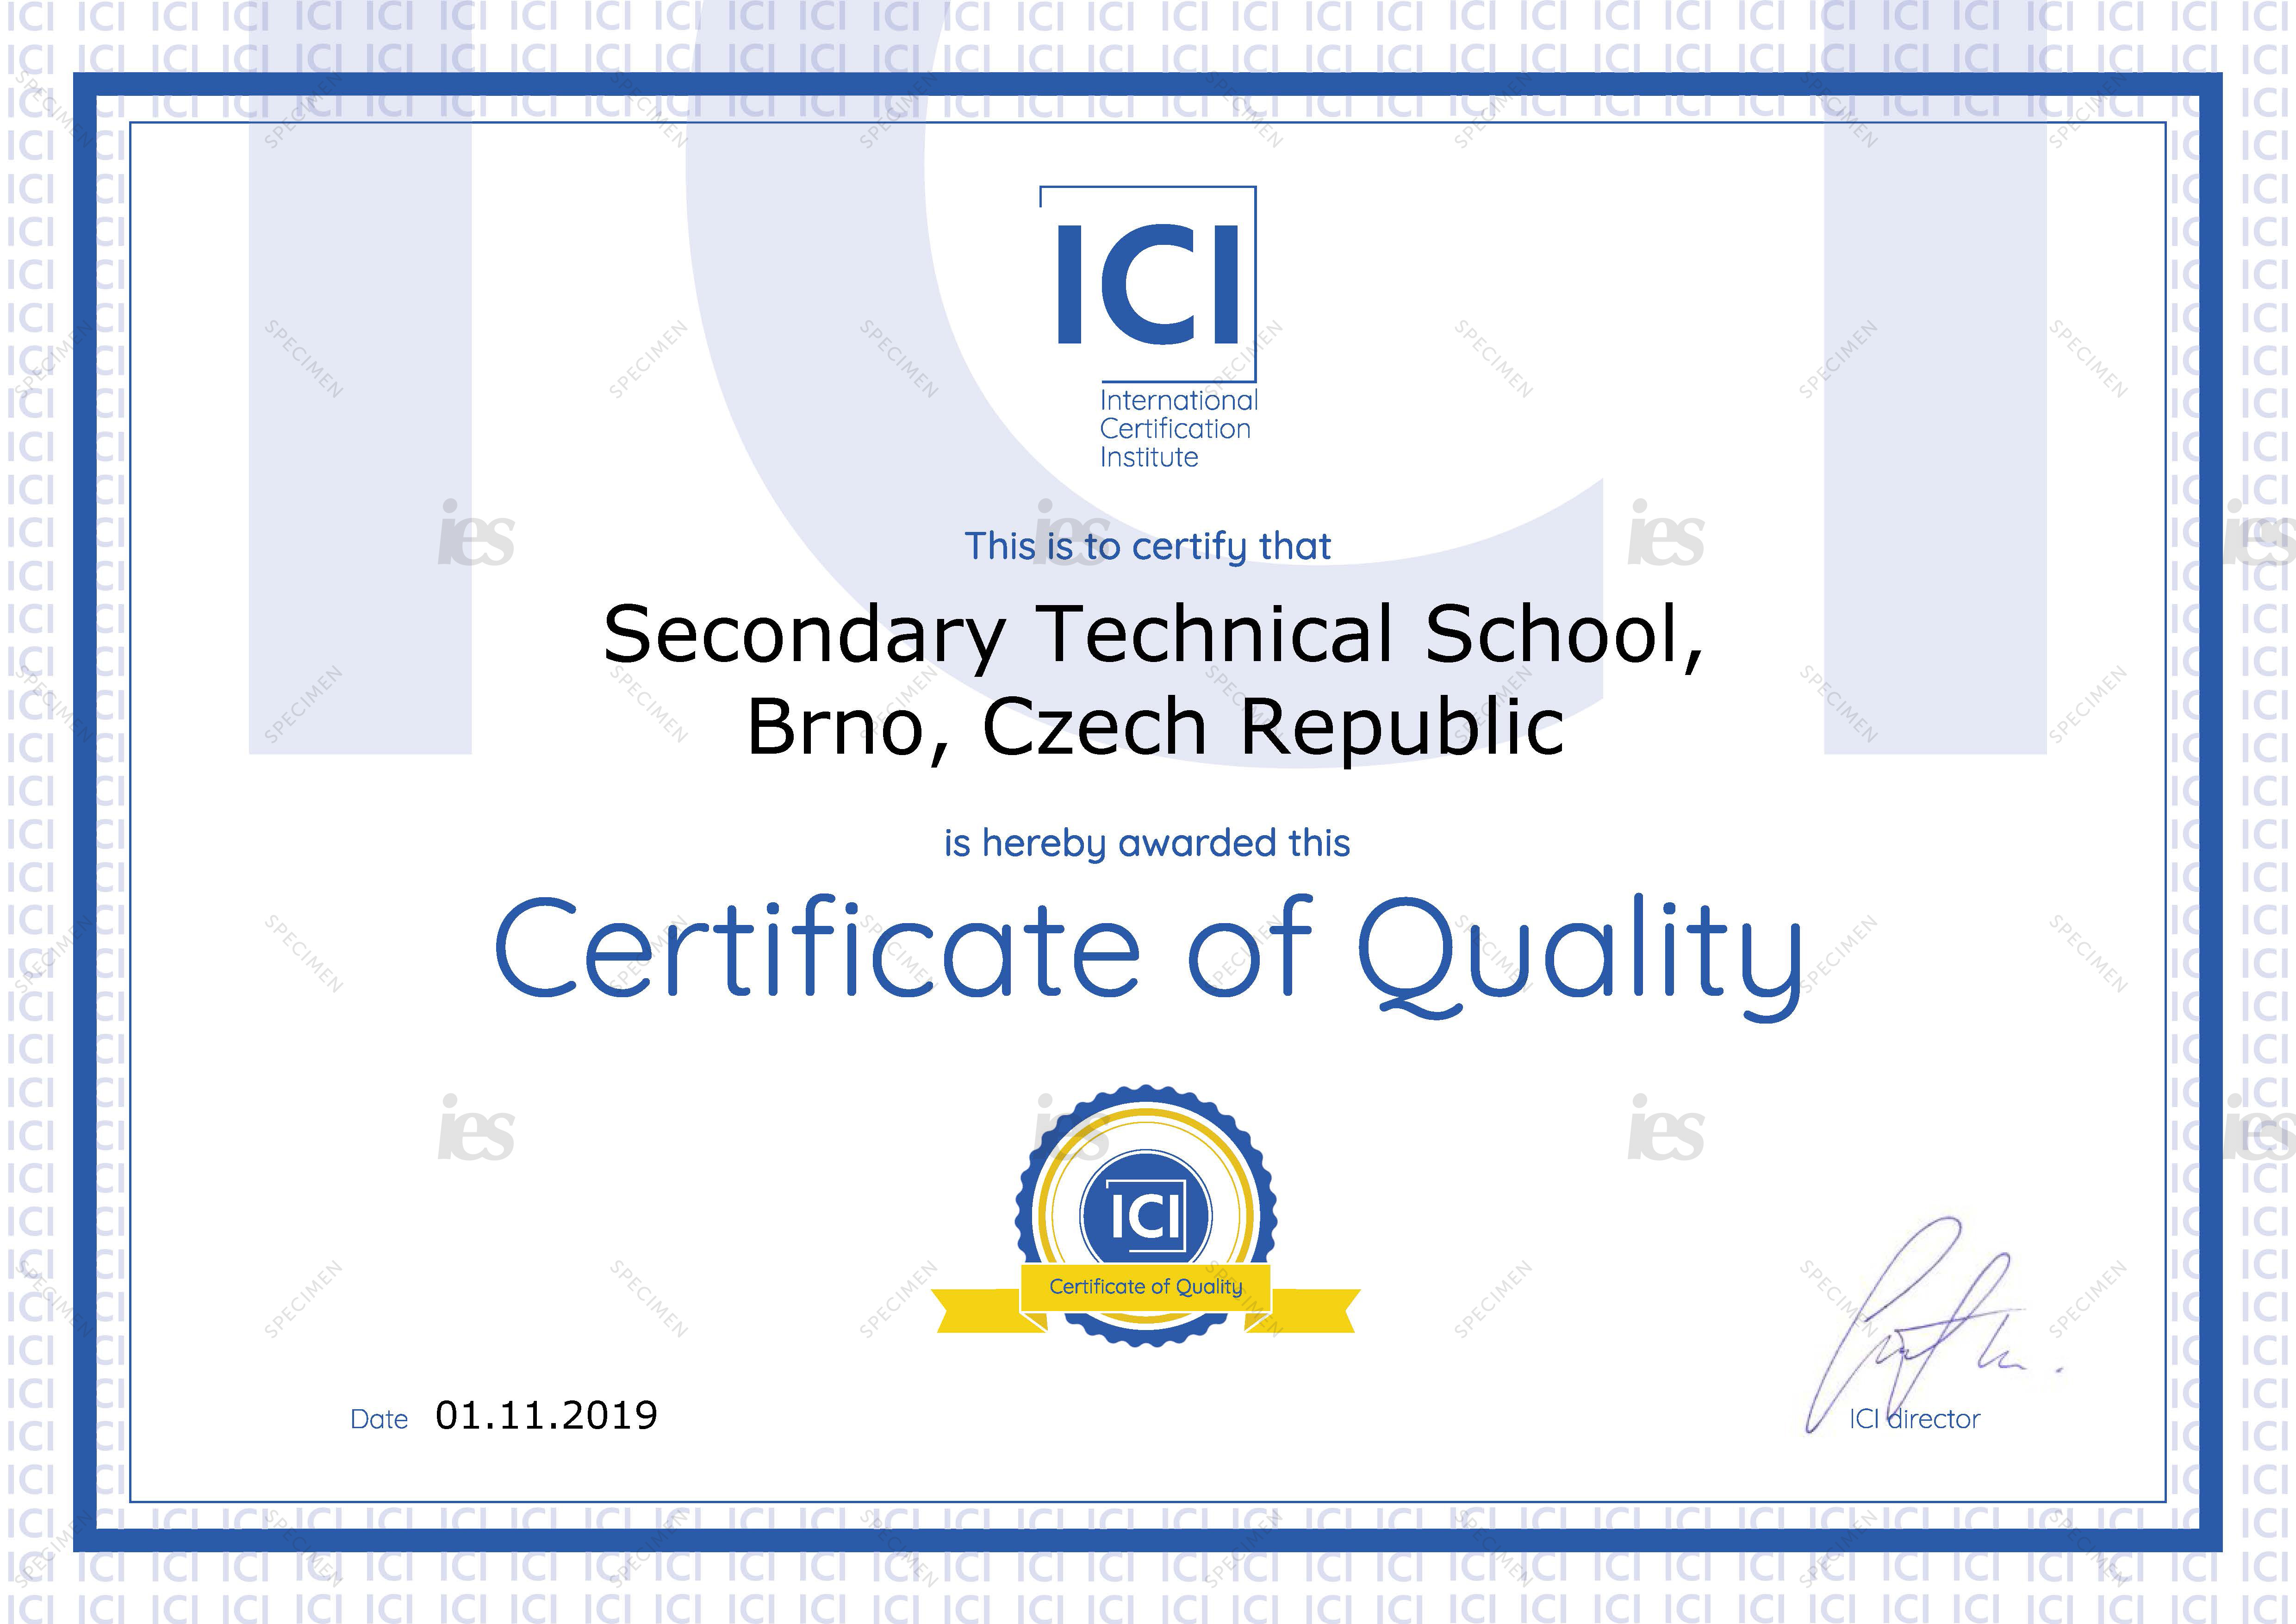 ICI Institution certificate